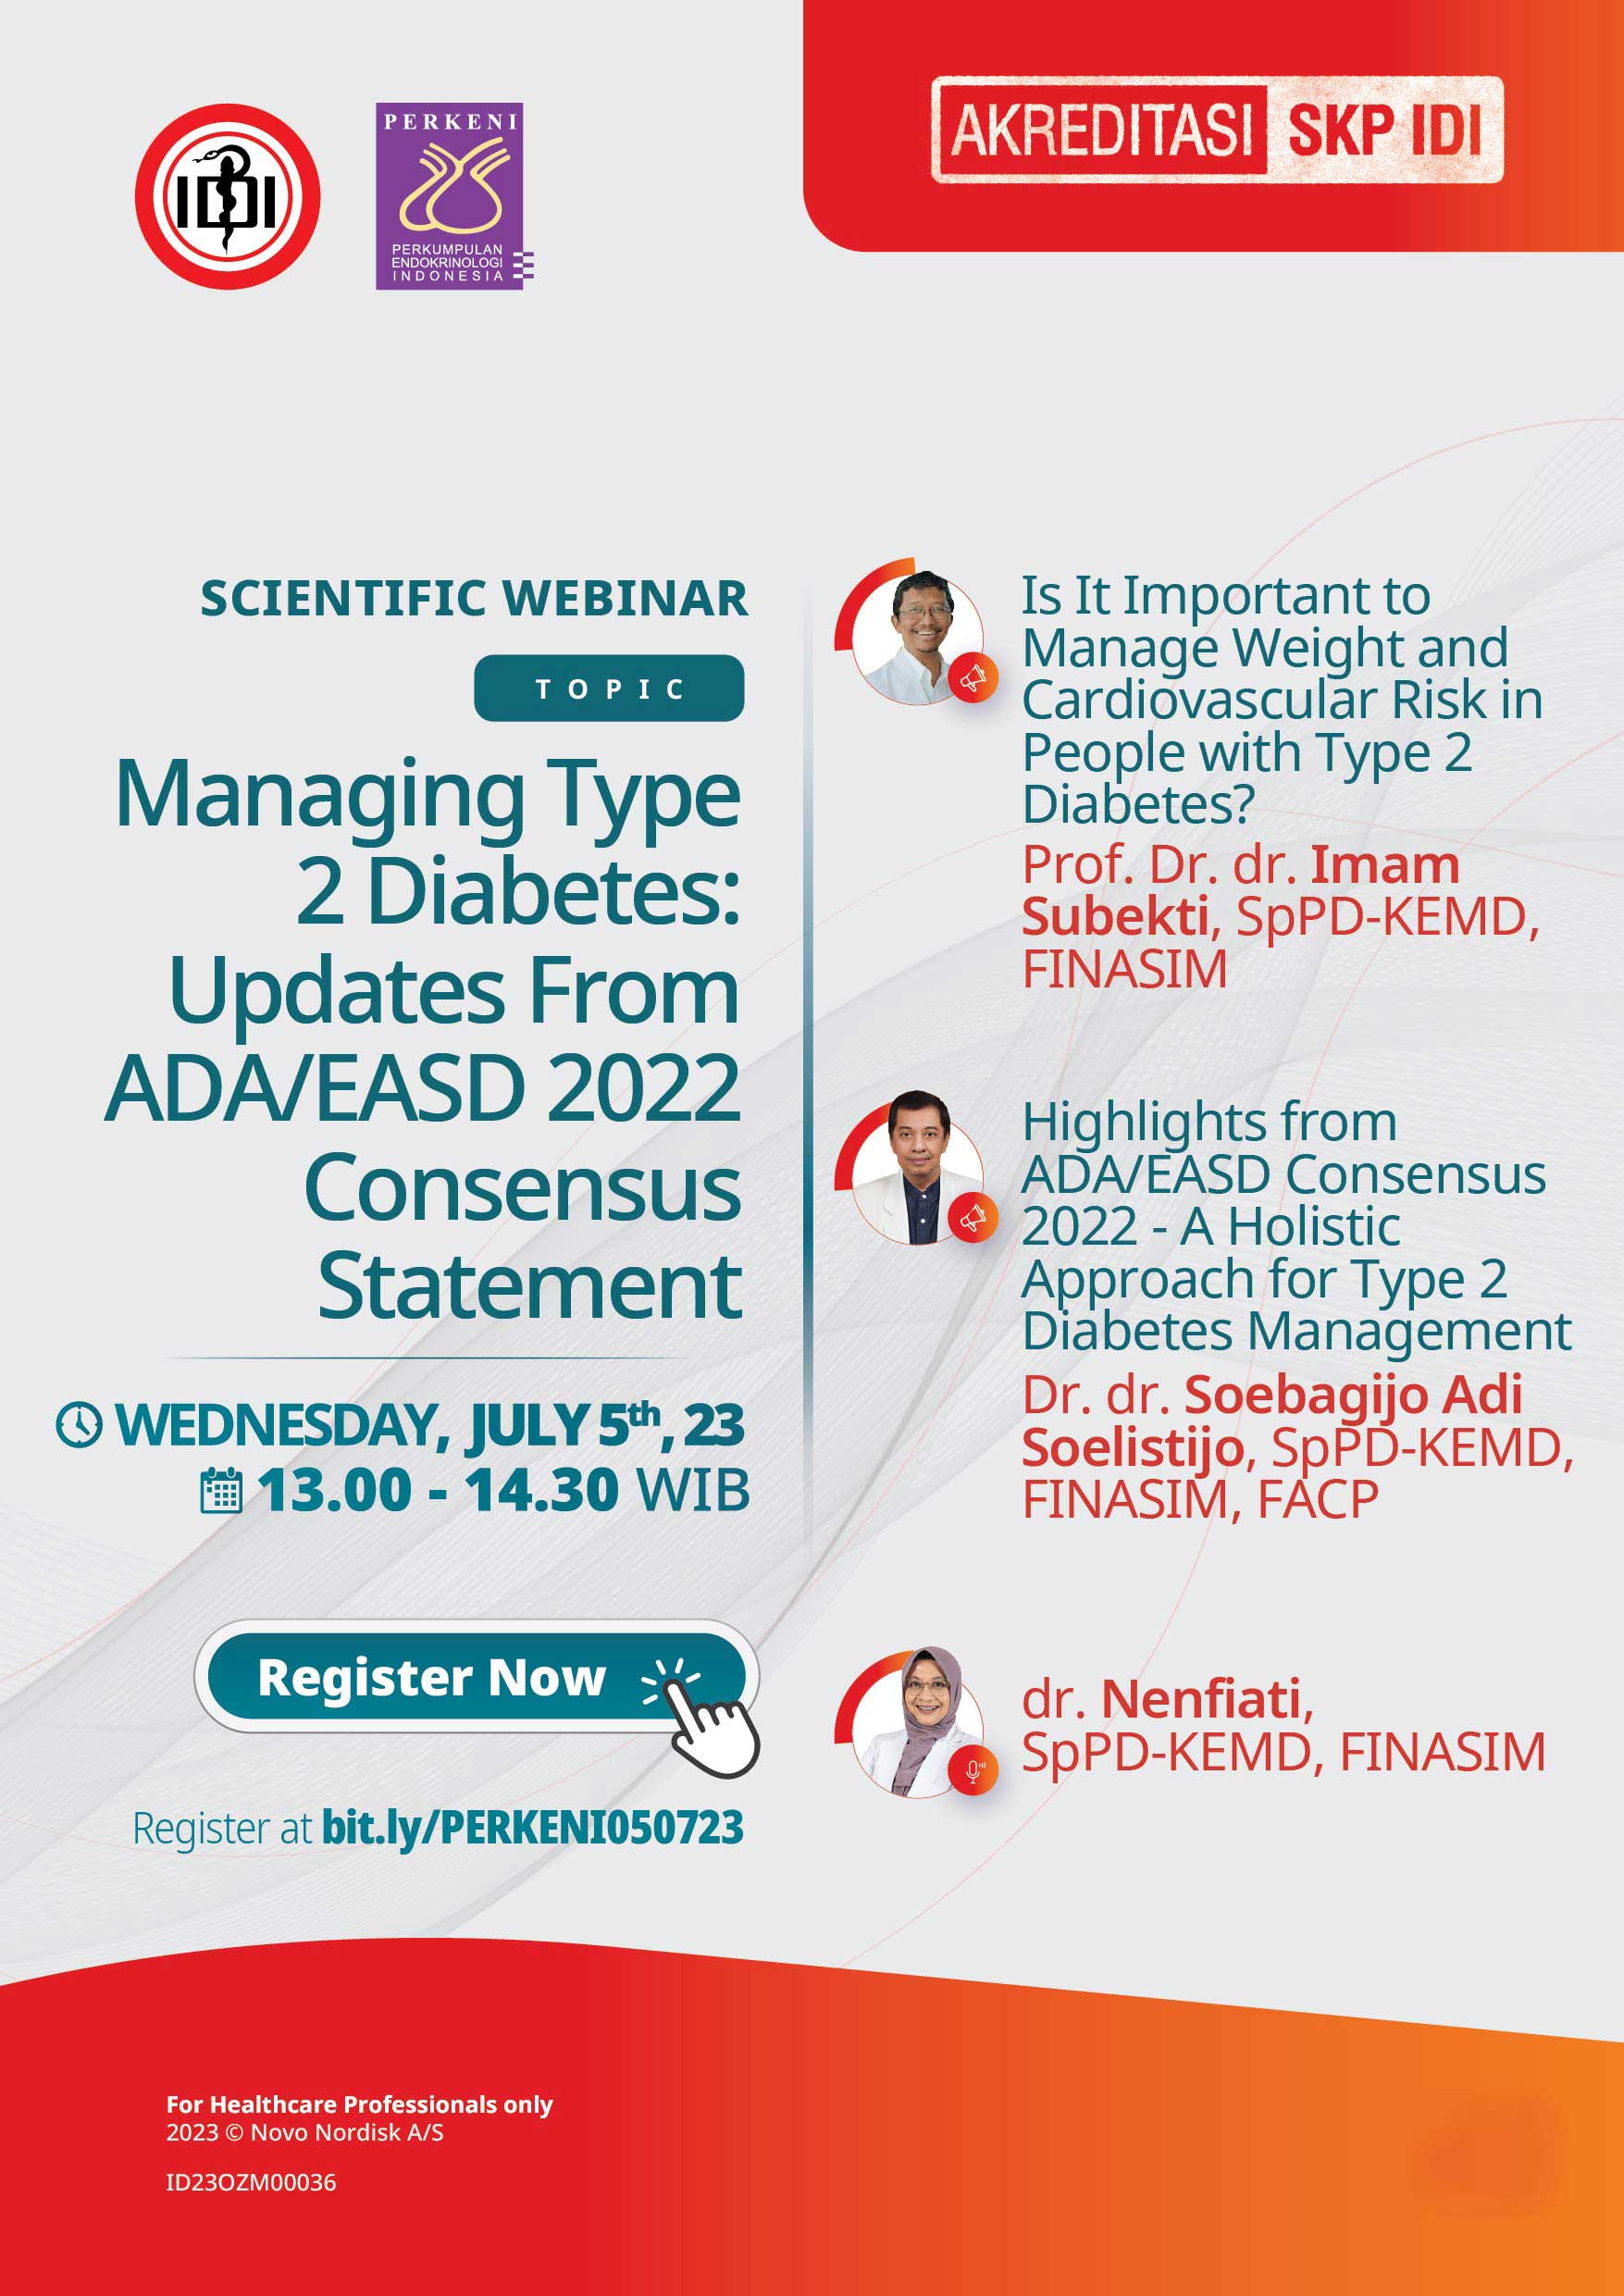 Managing Type 2 Diabetes: Updates From ADA/EASD 2022 Consensus Statement